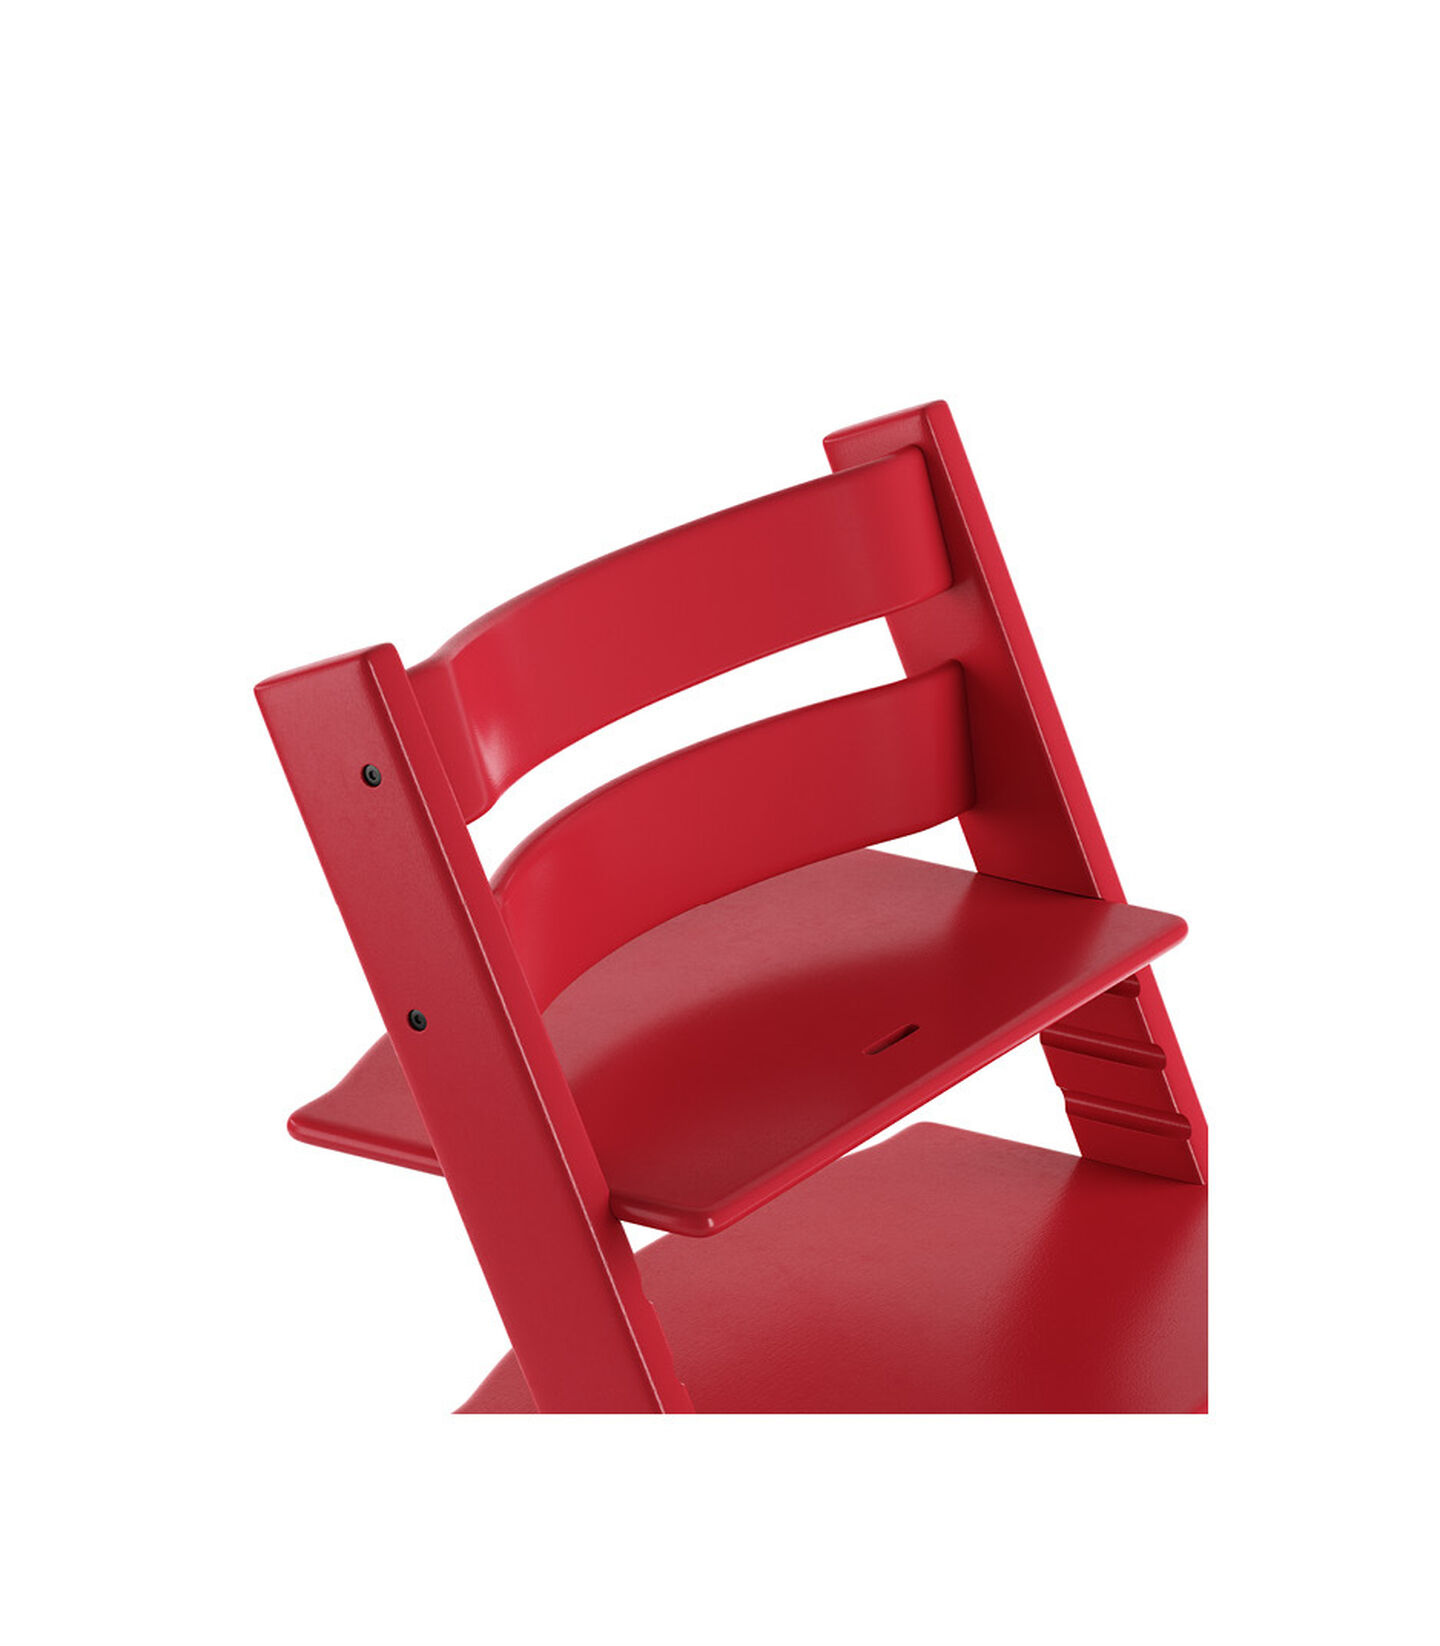 Tripp Trapp Chair Red